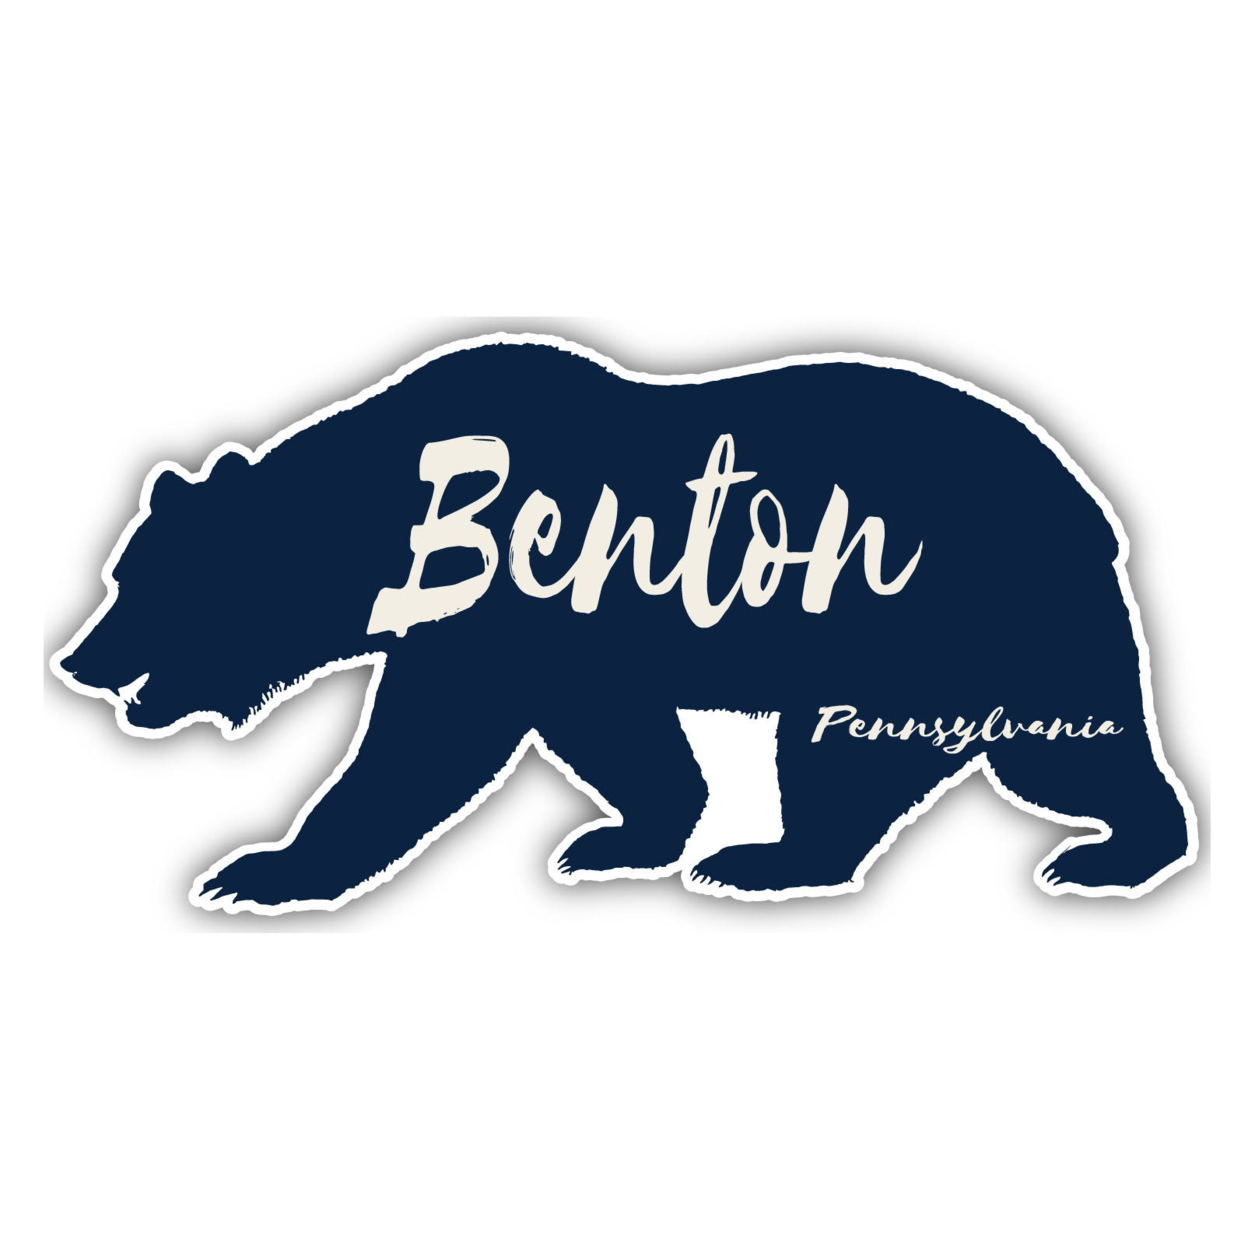 Benton Pennsylvania Souvenir Decorative Stickers (Choose Theme And Size) - Single Unit, 8-Inch, Bear